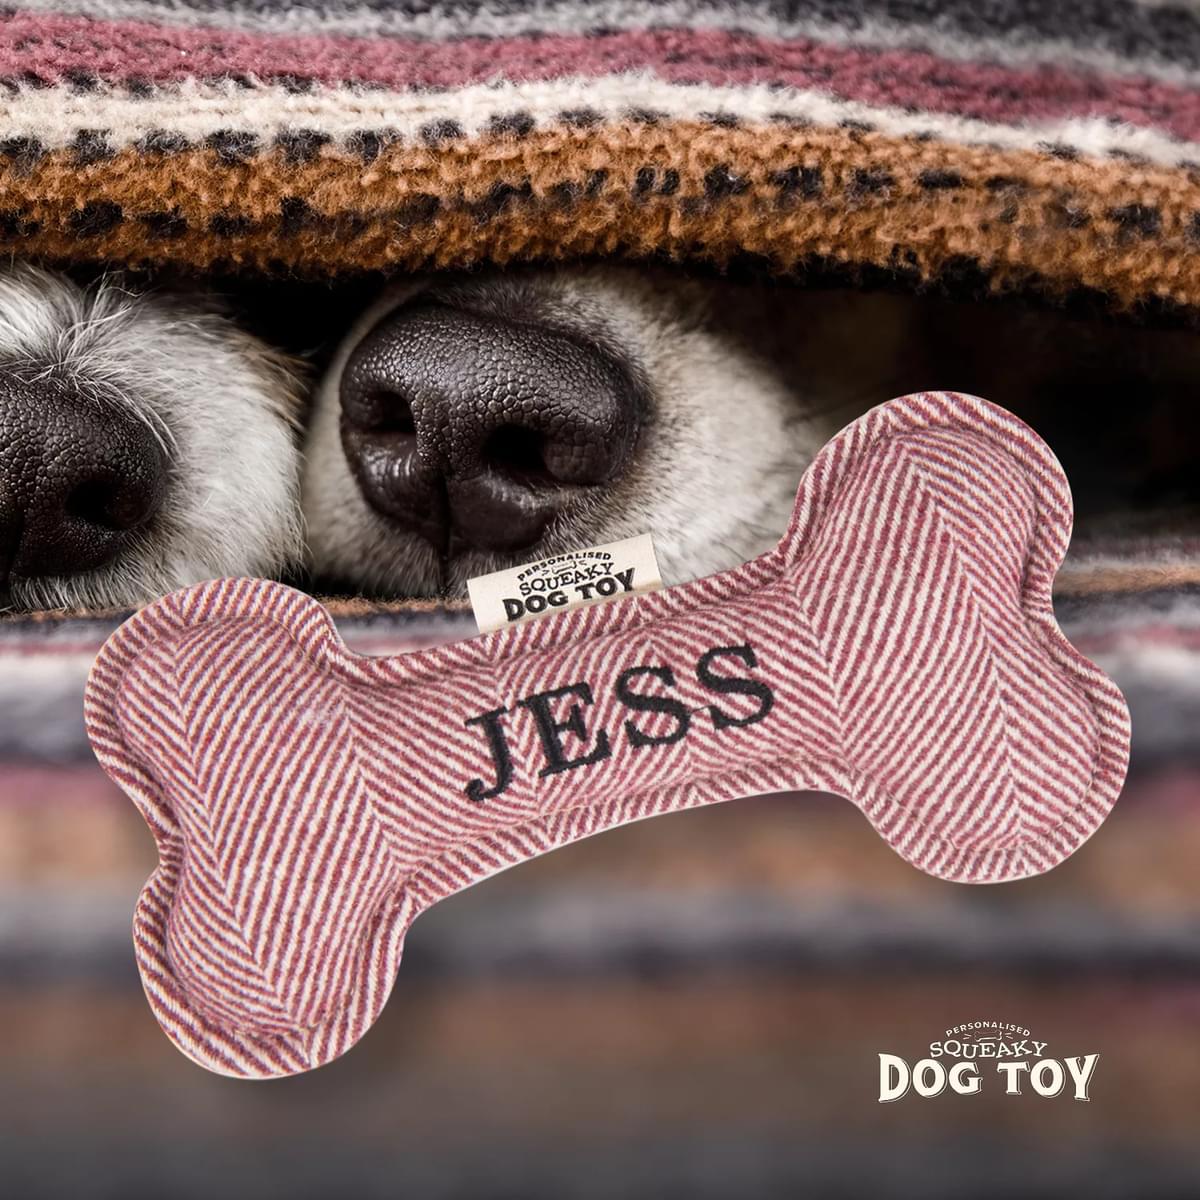 Named Squeaky Dog Toy- Jess. Bone shaped herringbone tweed pattern dog toy. 